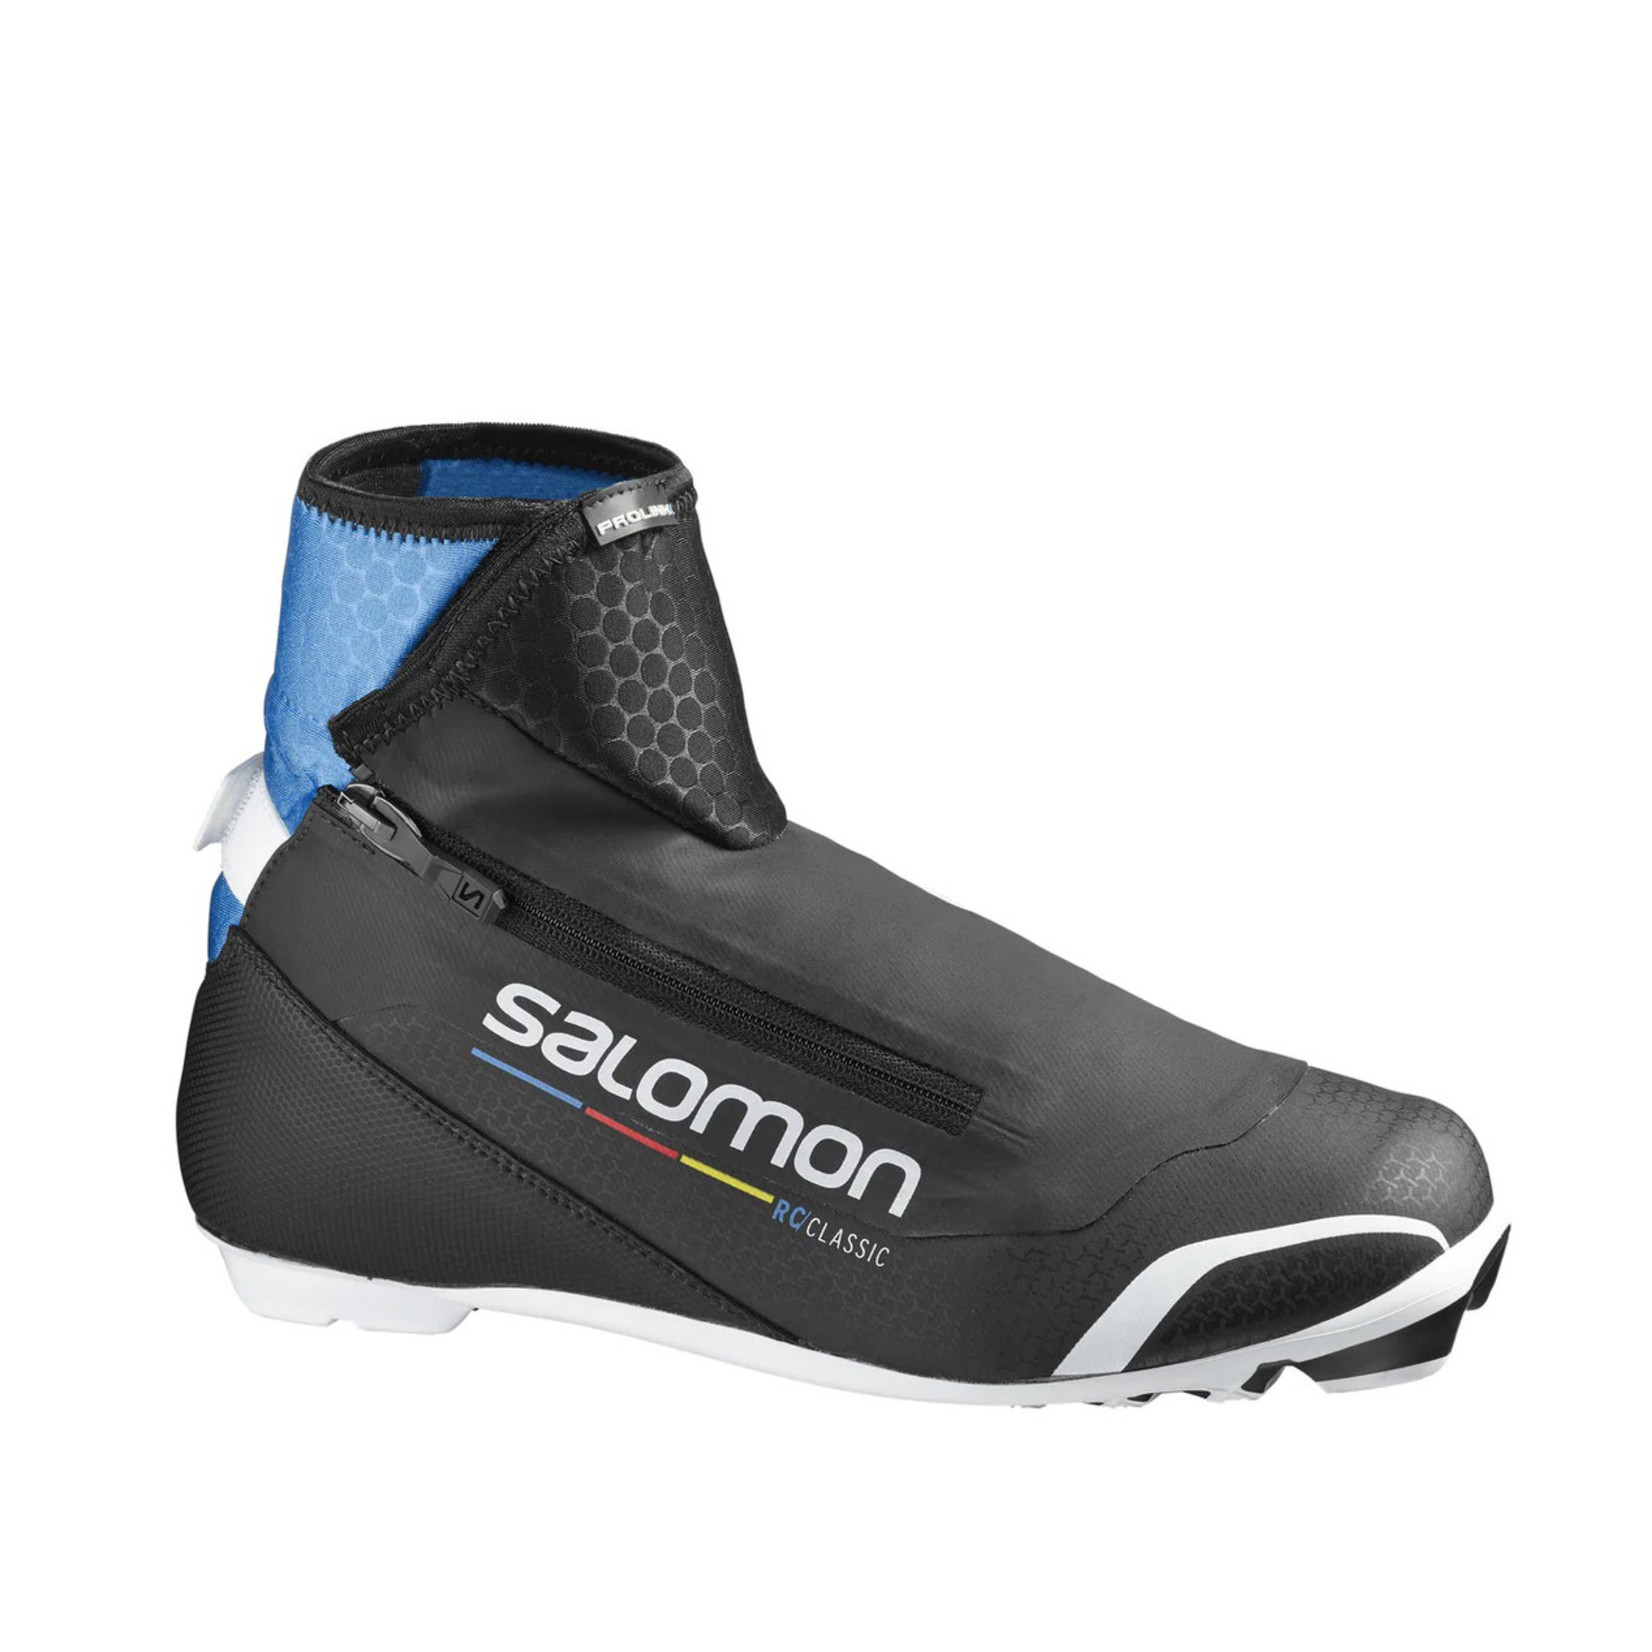 SALOMON Salomon Prolink RC Classic Boot 19/20